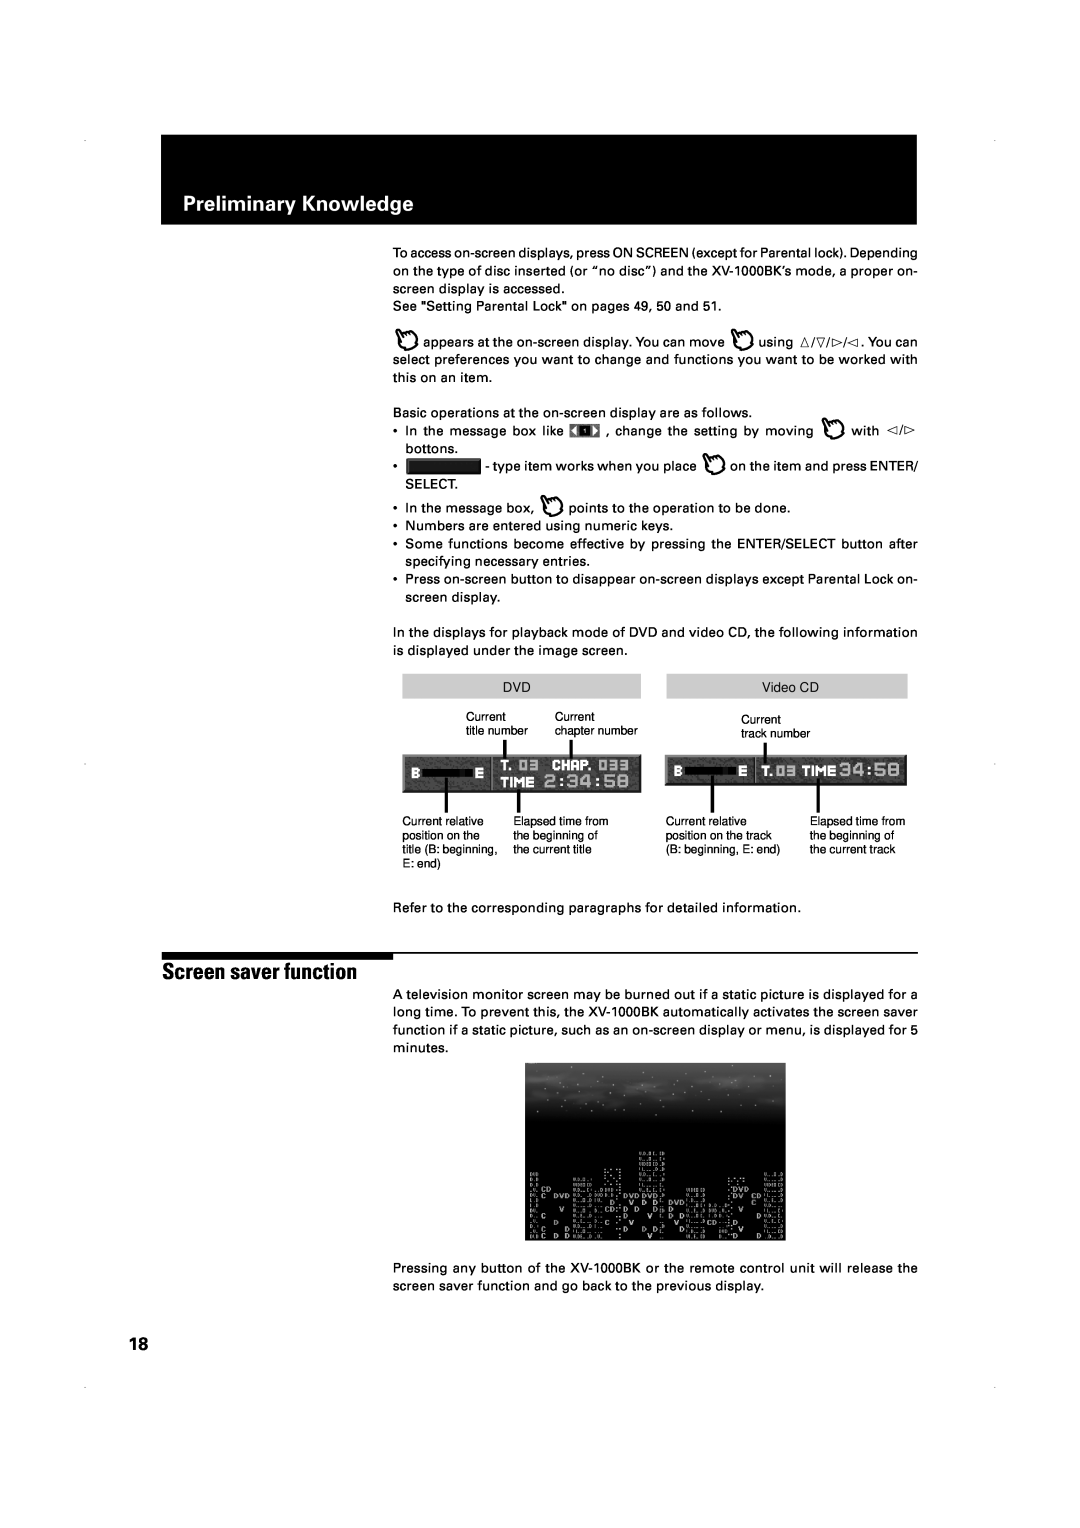 JVC XV-1000BK manual Screen saver function, Preliminary Knowledge 